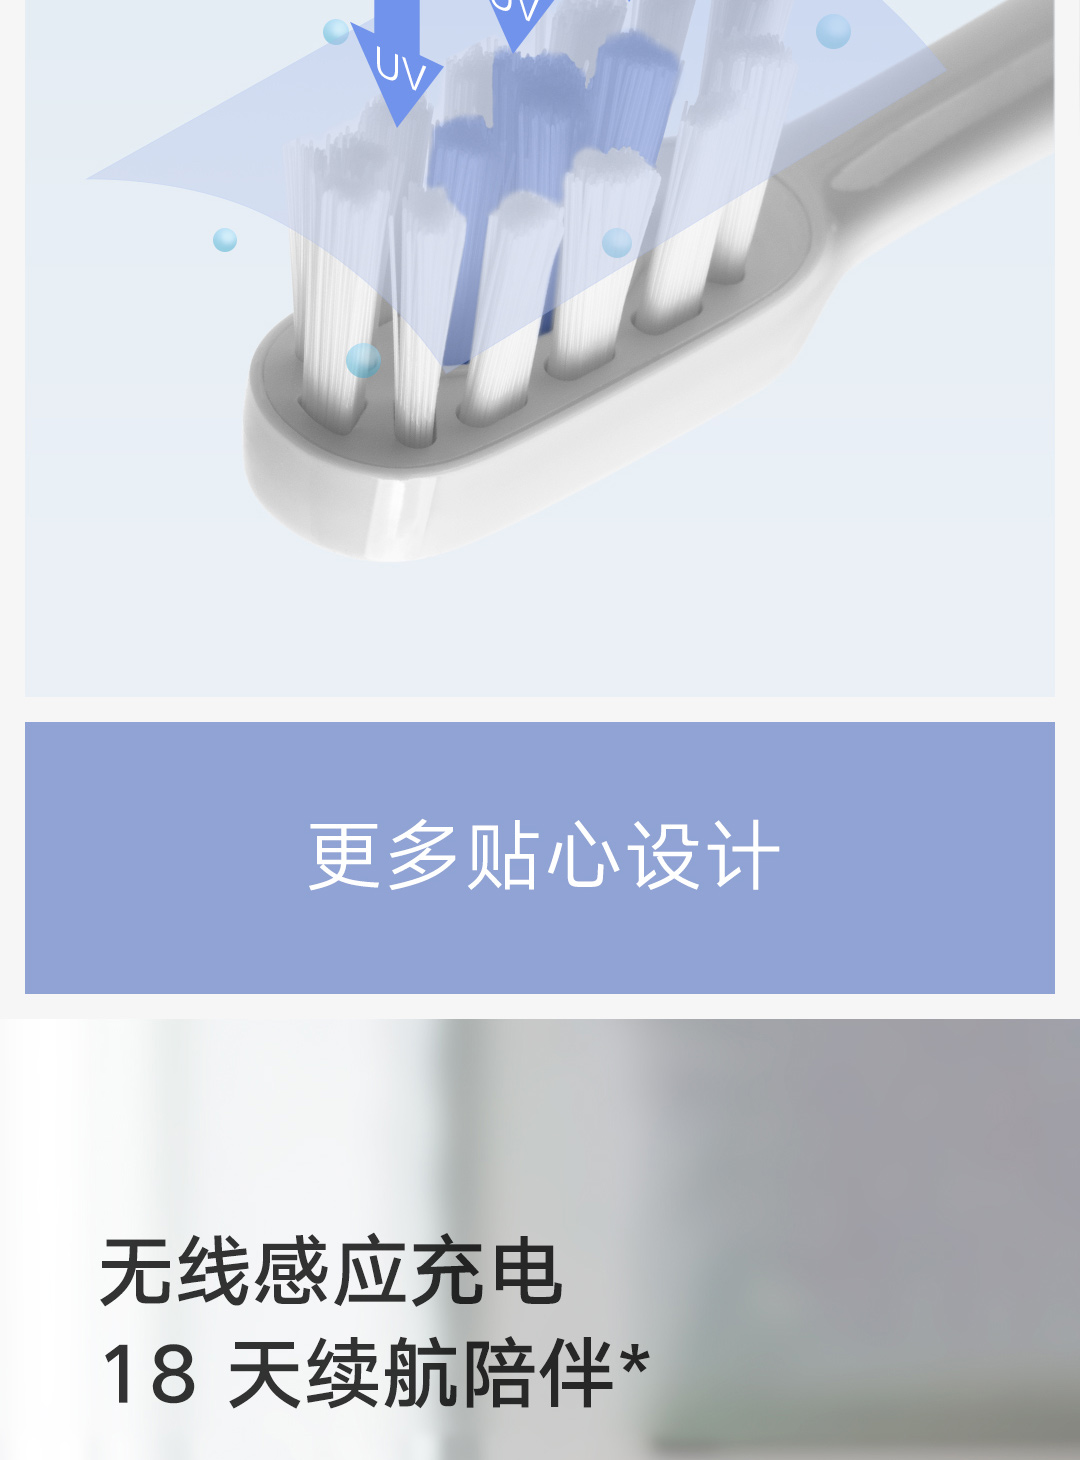 product_奇妙_米家声波电动牙刷T500